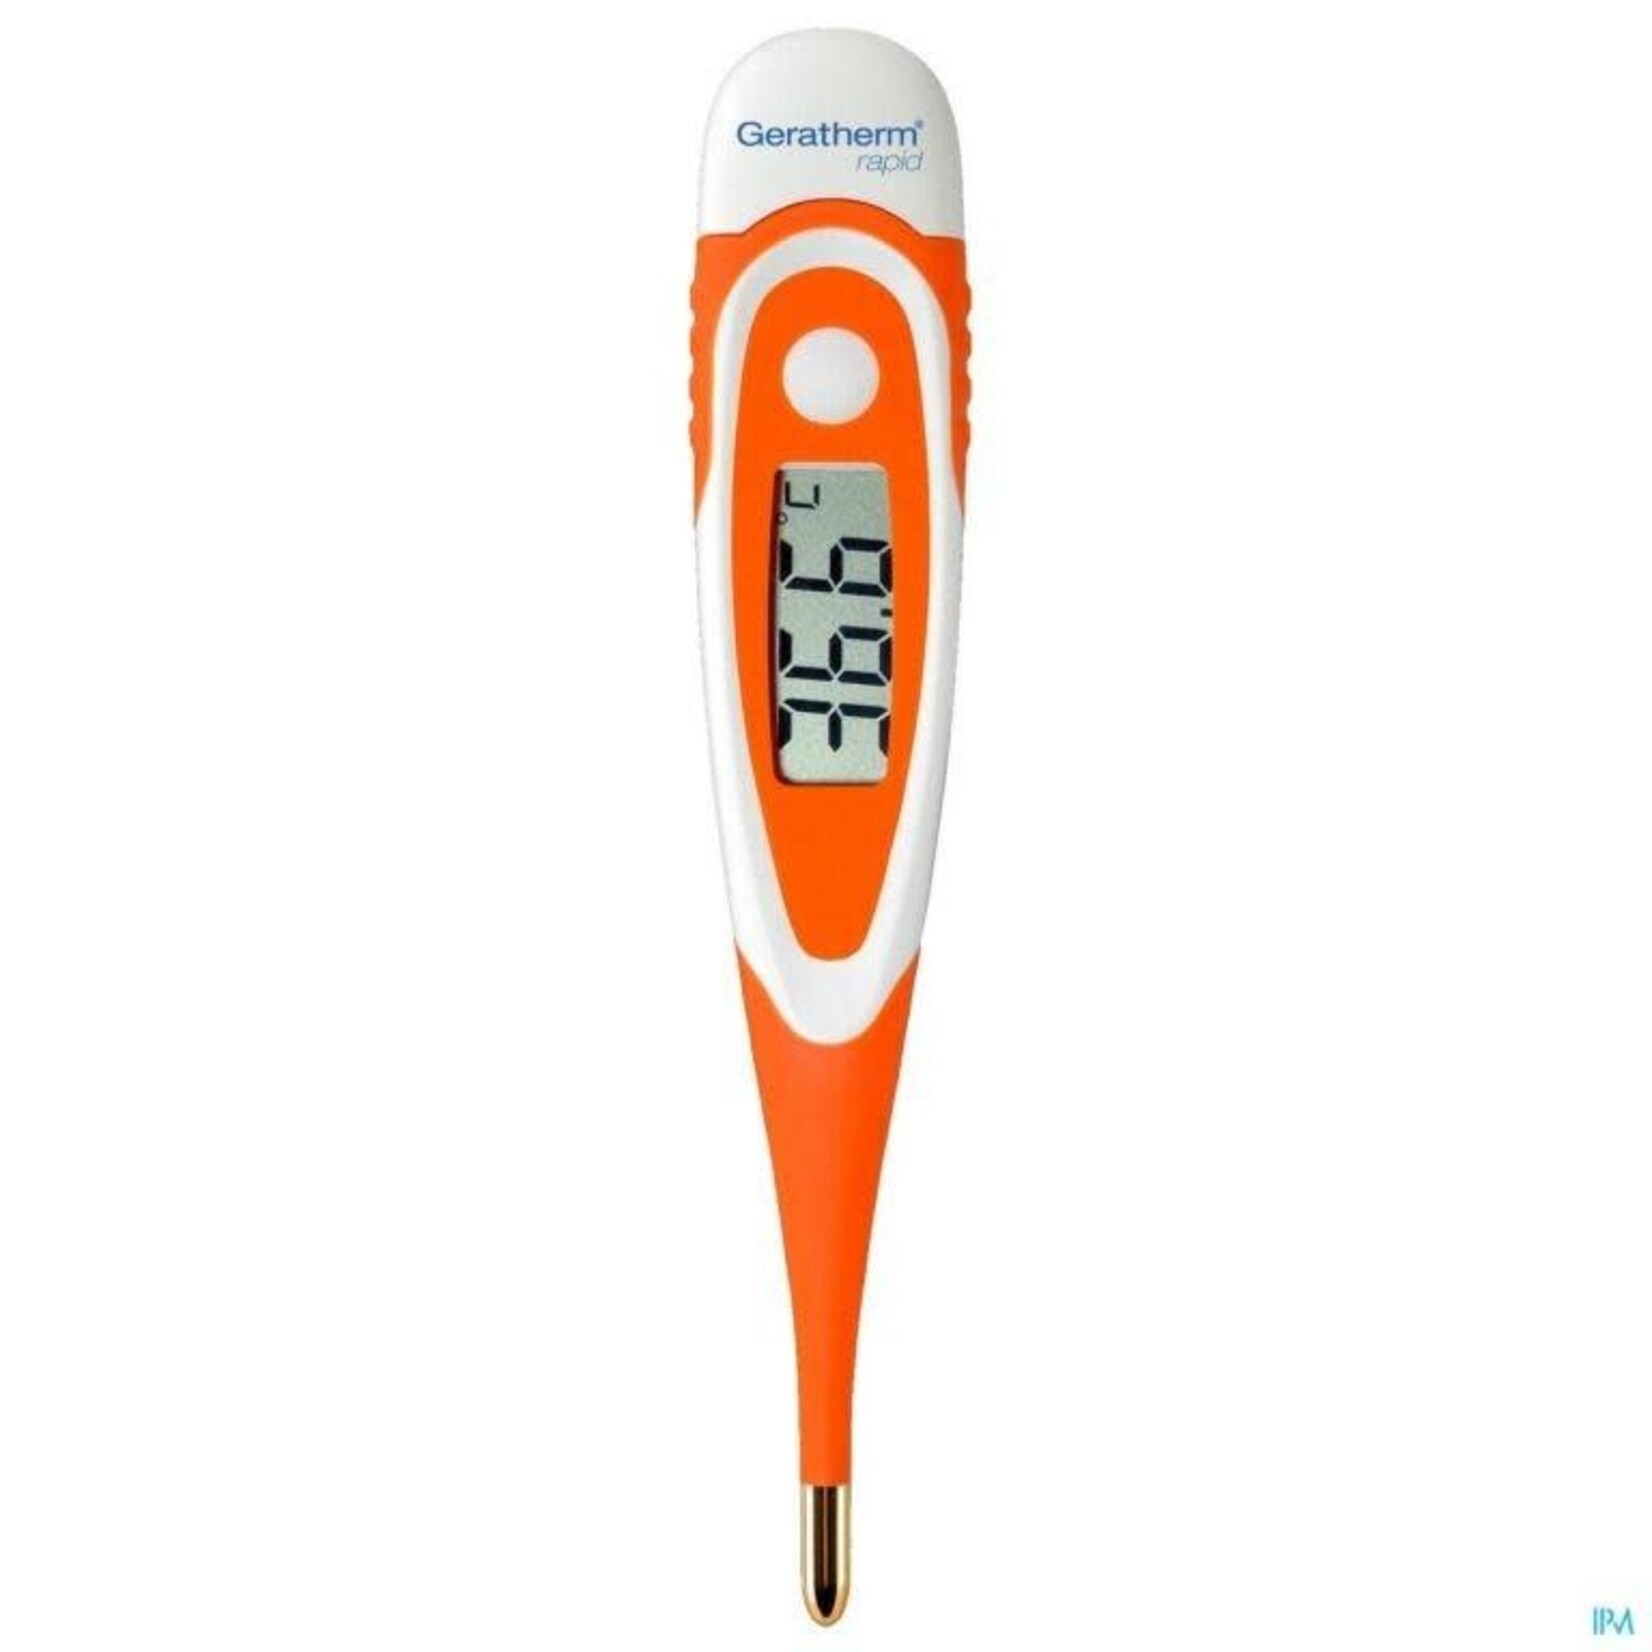 Avent Thermomètre digital flexible 9 sec